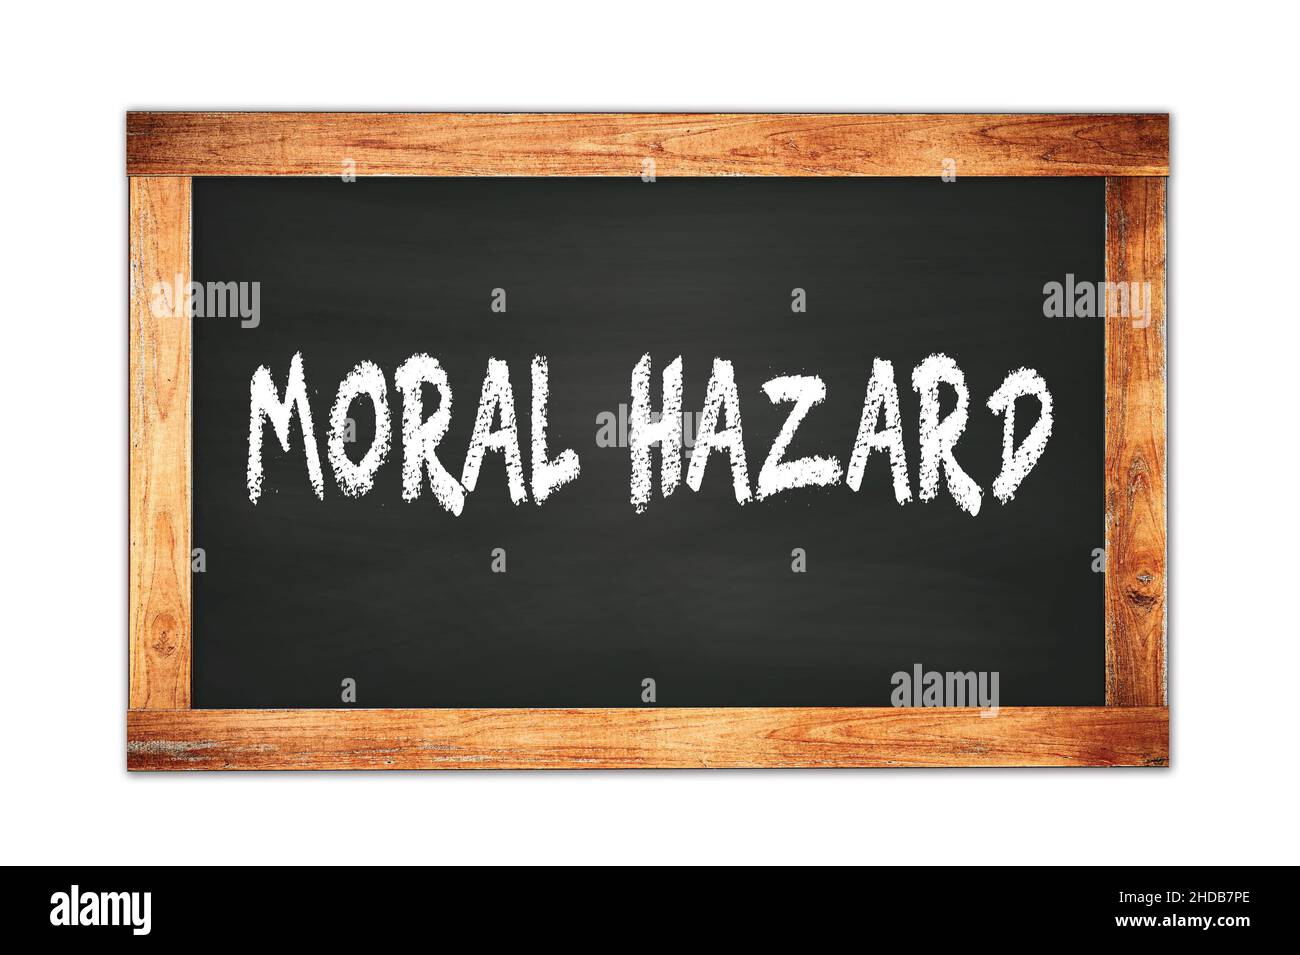 MORAL  HAZARD text written on black wooden frame school blackboard. Stock Photo